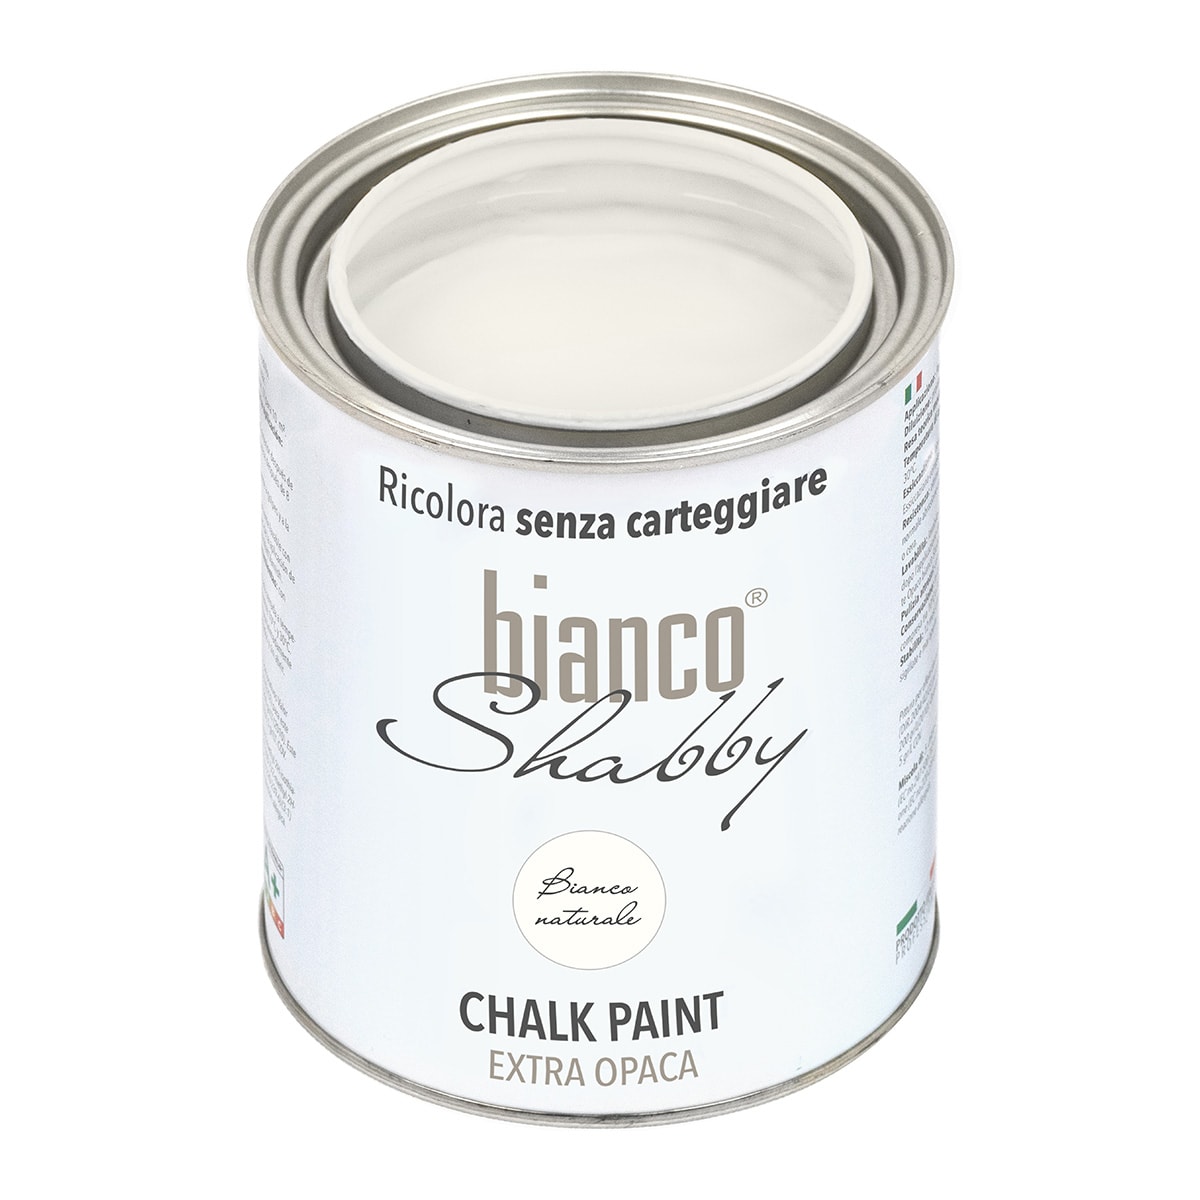 Chalk Paint Ecologica Bianco Naturale 100% Italiana - biancoshabby®